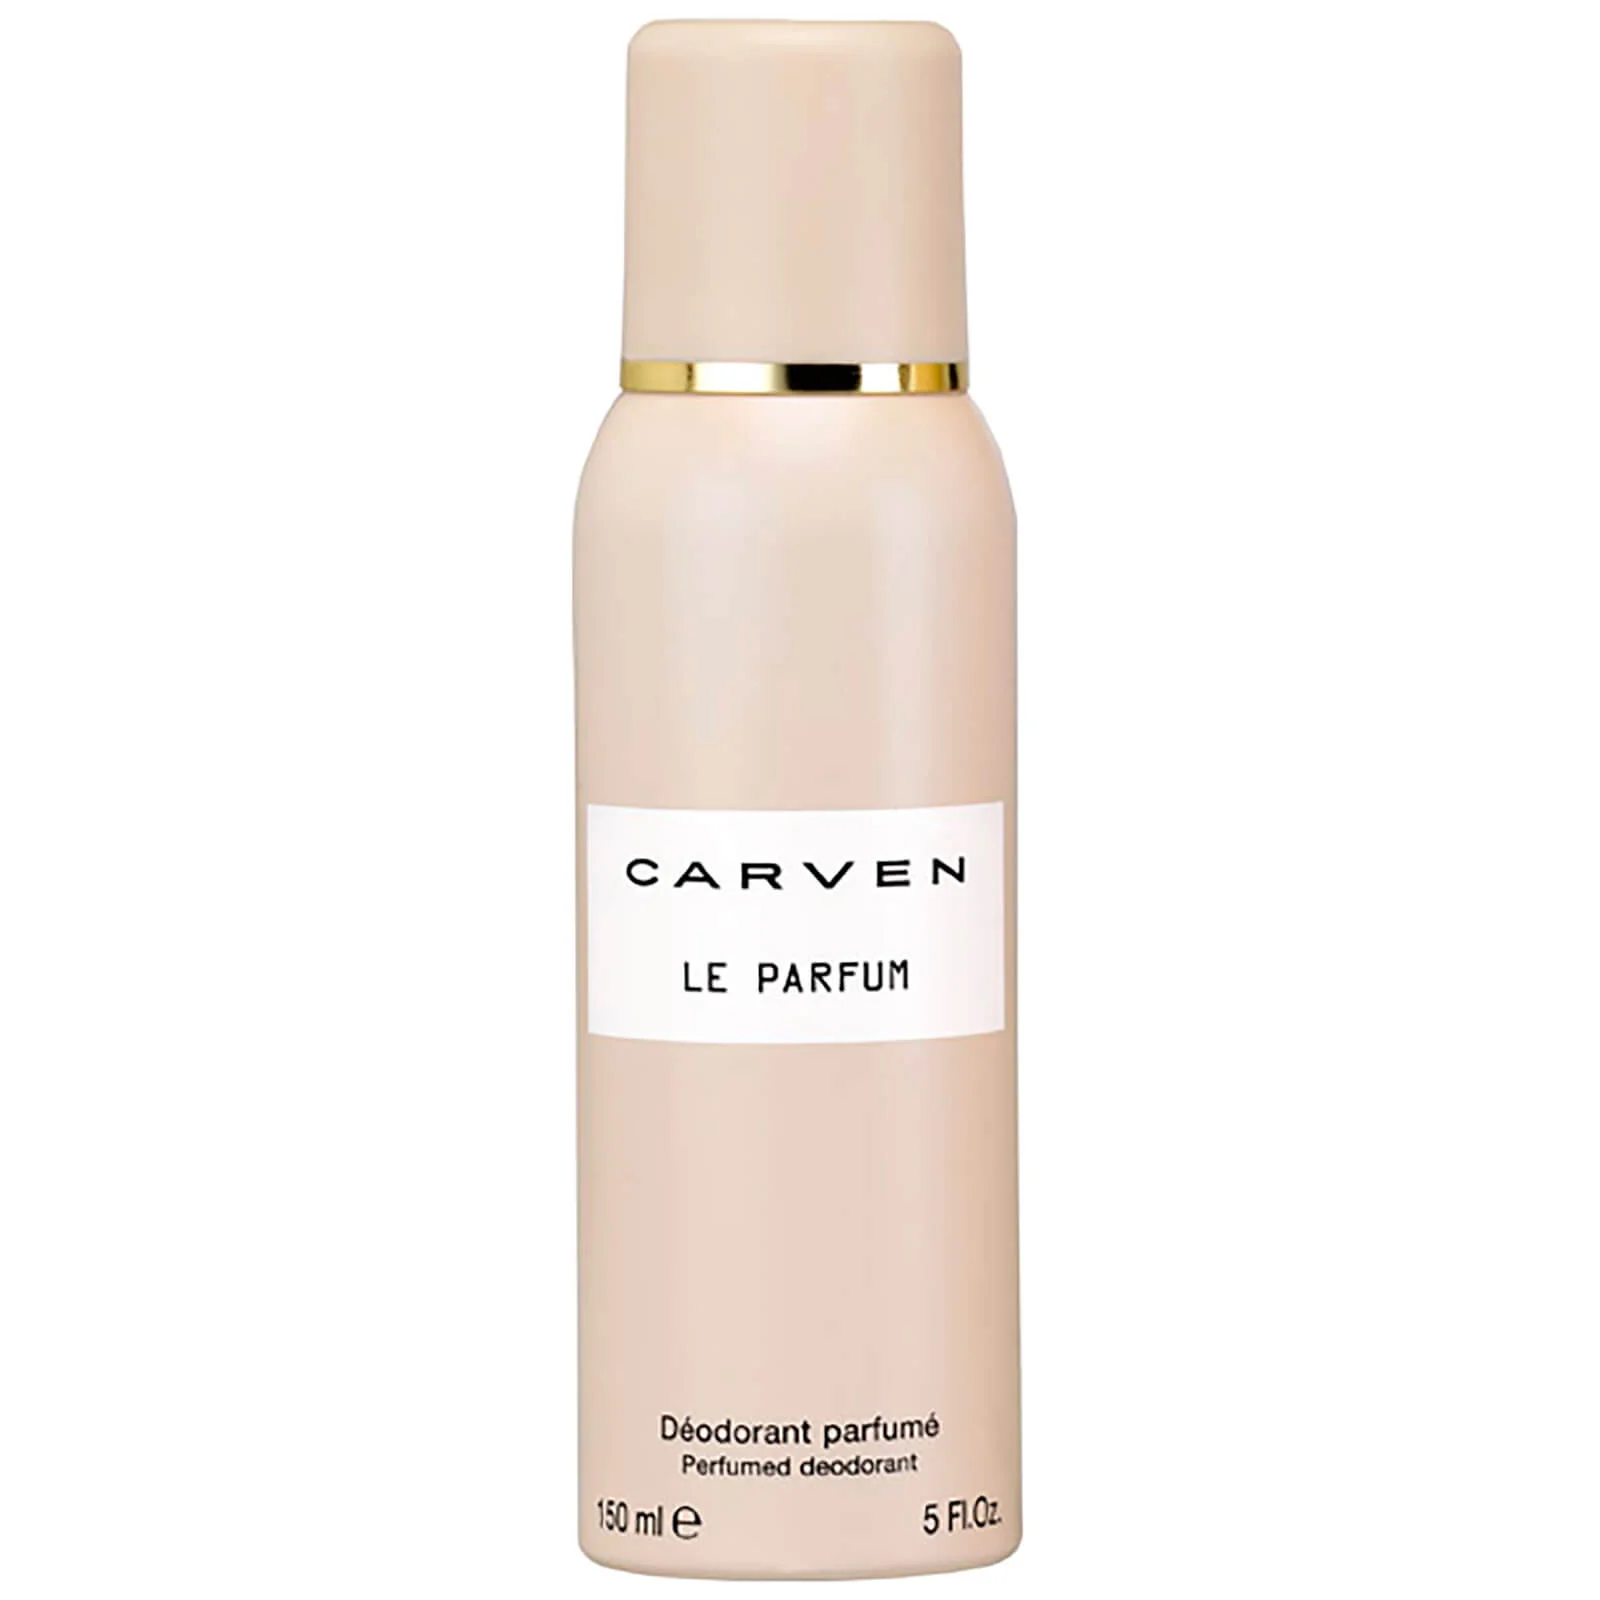 Carven Le Parfum Perfumed Deodorant (150ml) Image 1